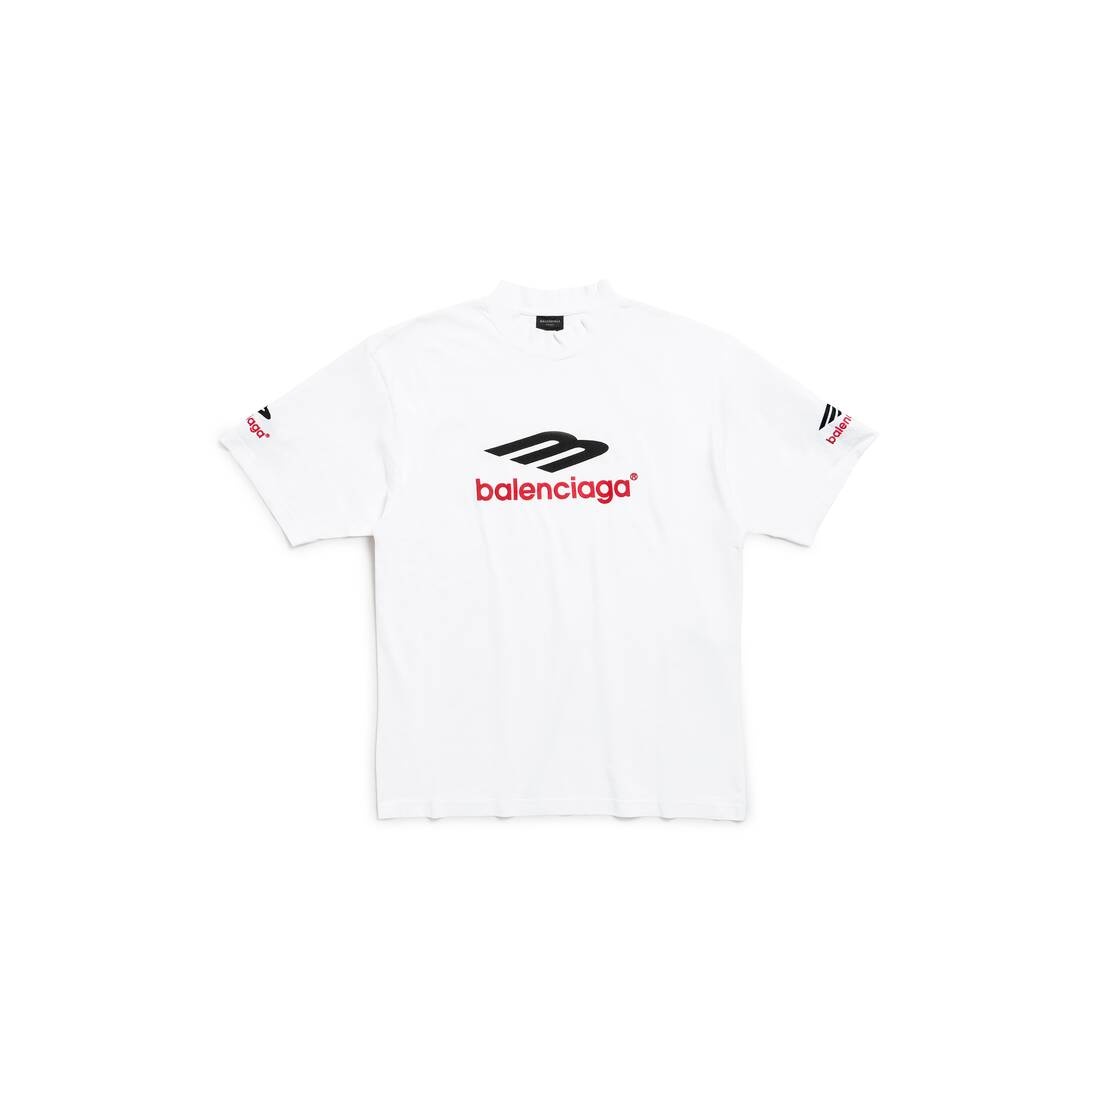 3b Sports Icon T-shirt Medium Fit in White/black - 1